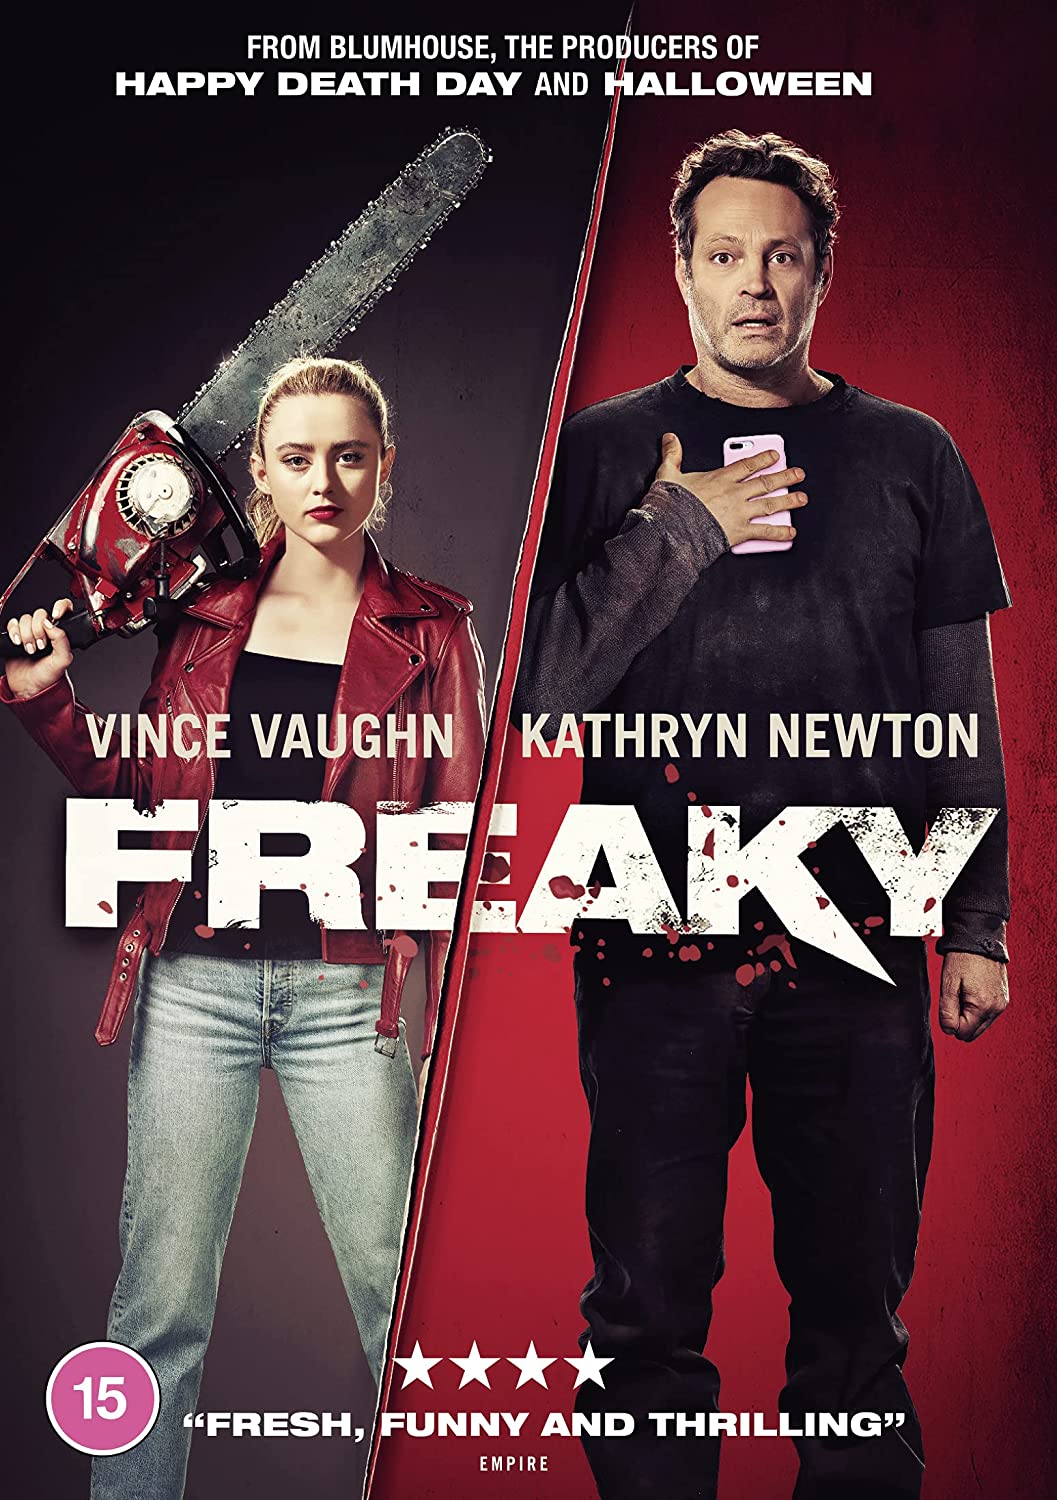 Freaky [2020] - Horror/Comedy [DVD]